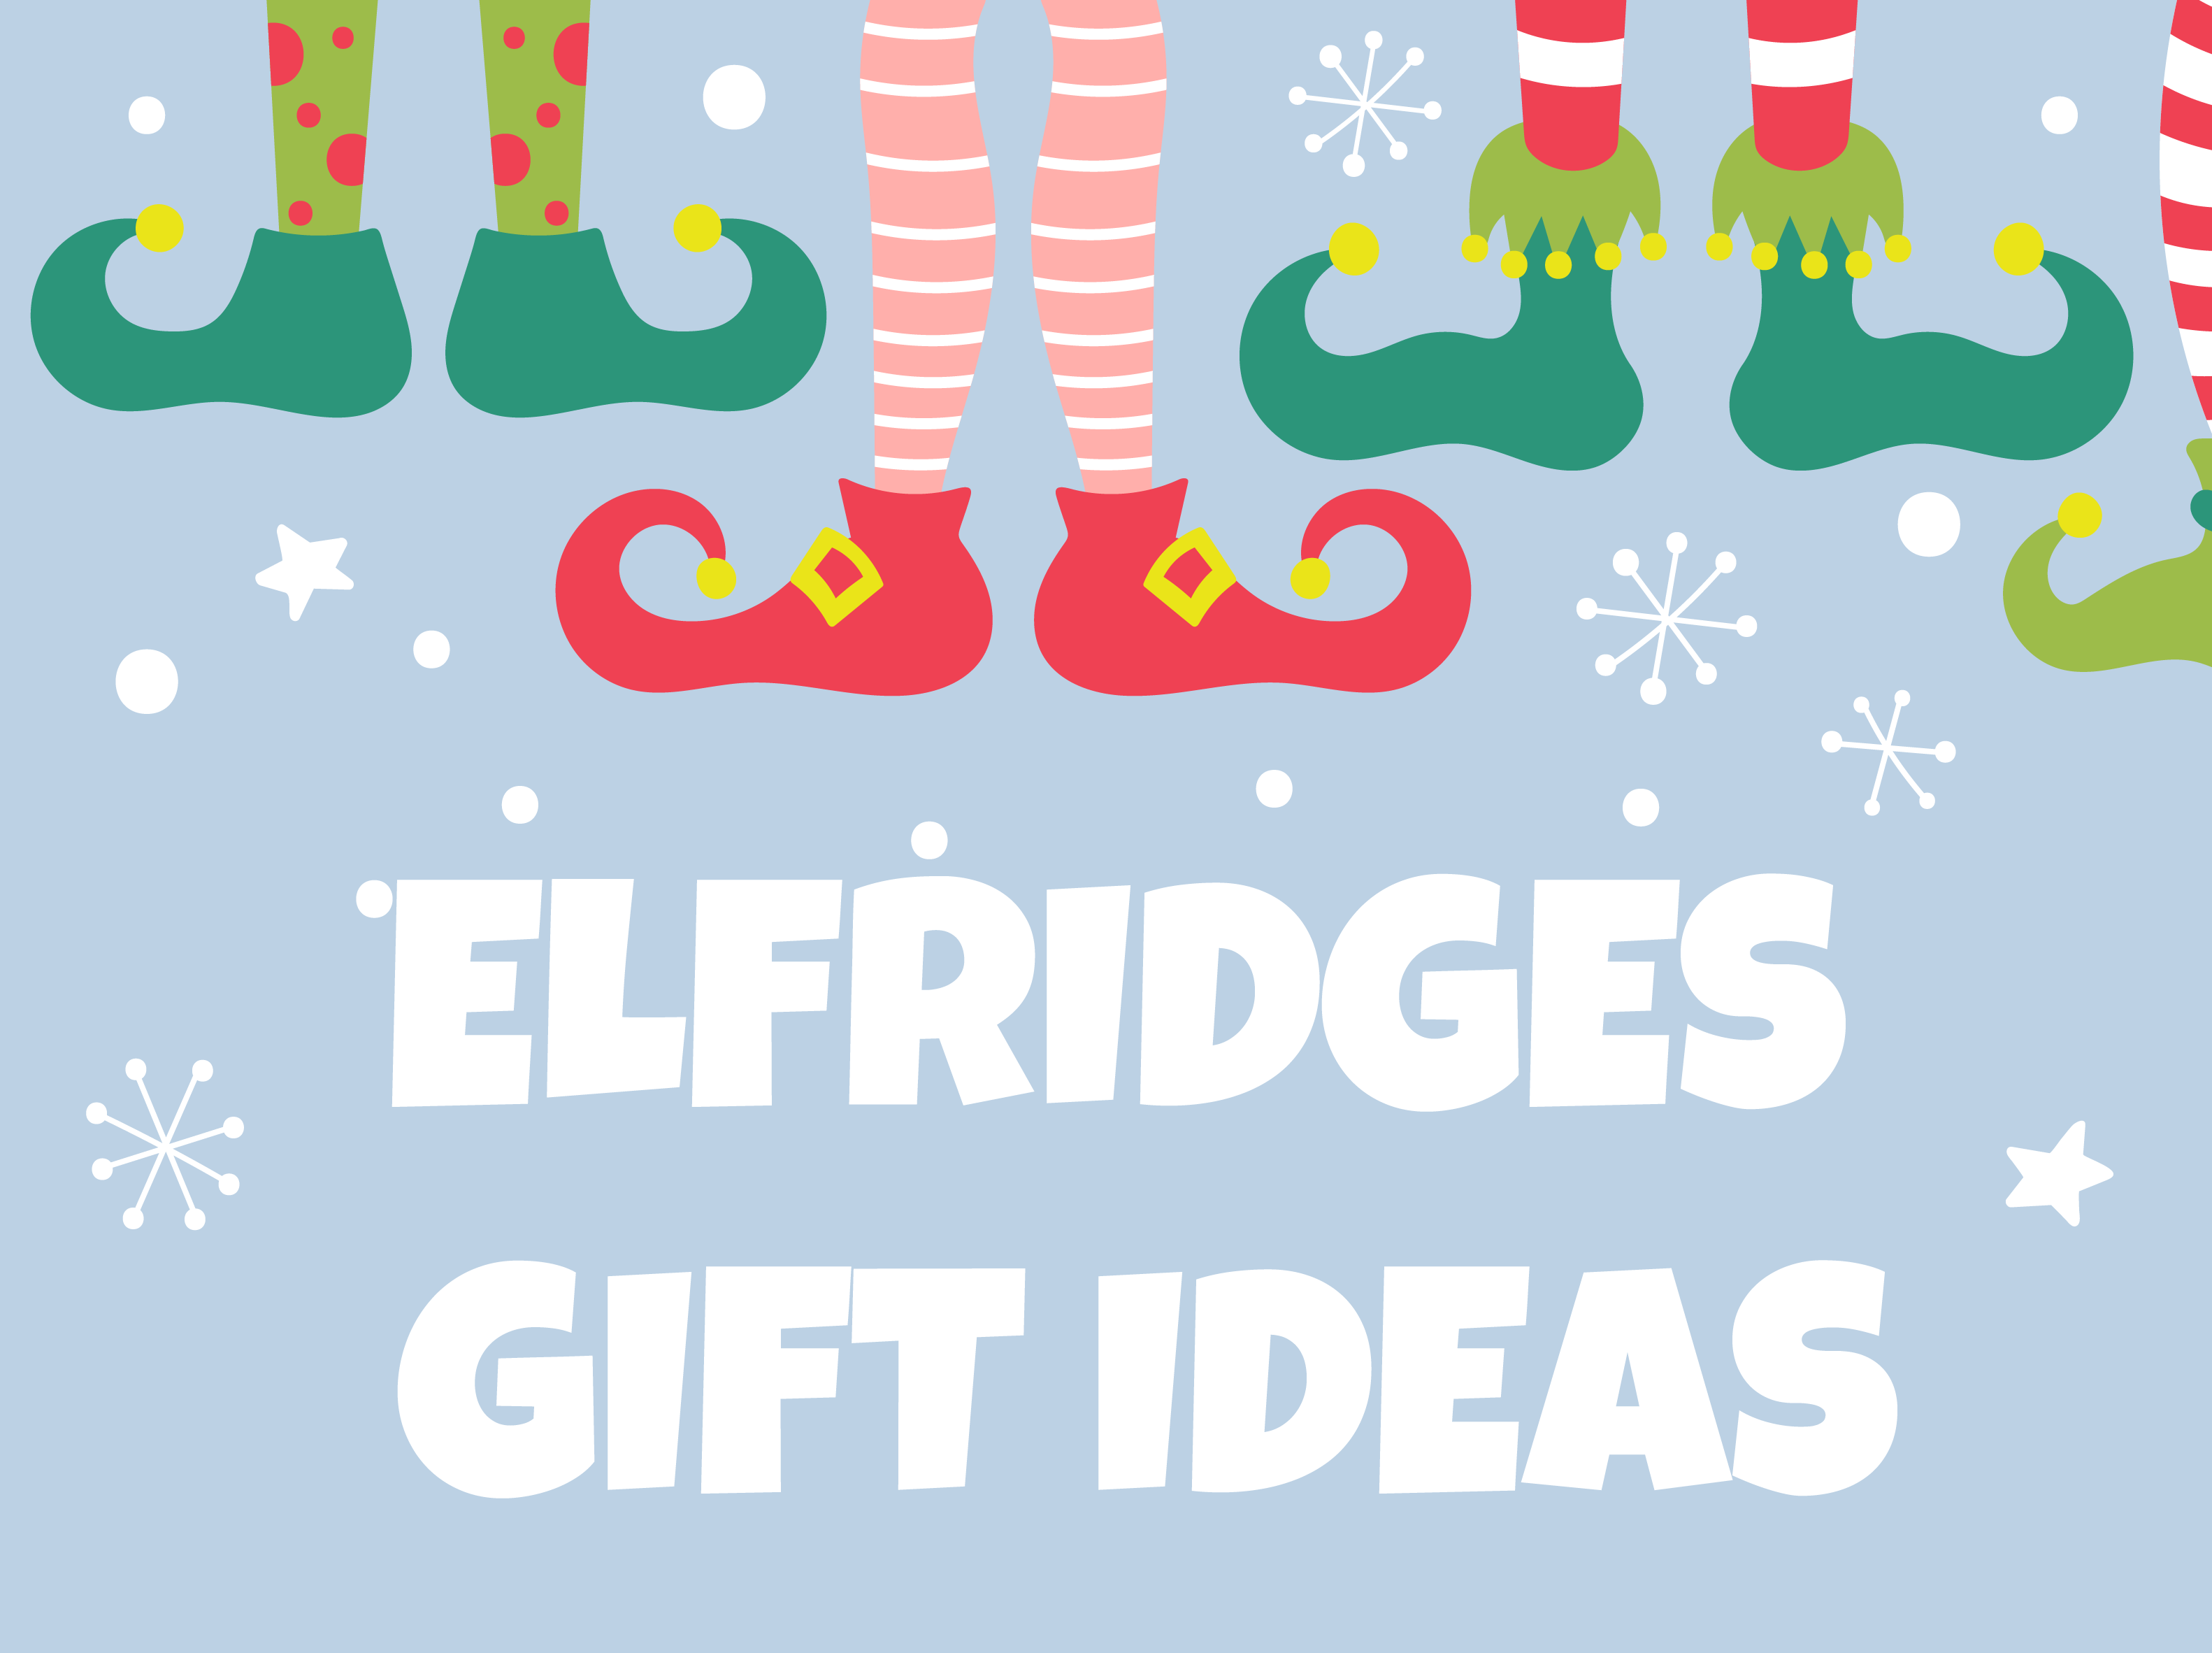 Elfridges gift ideas